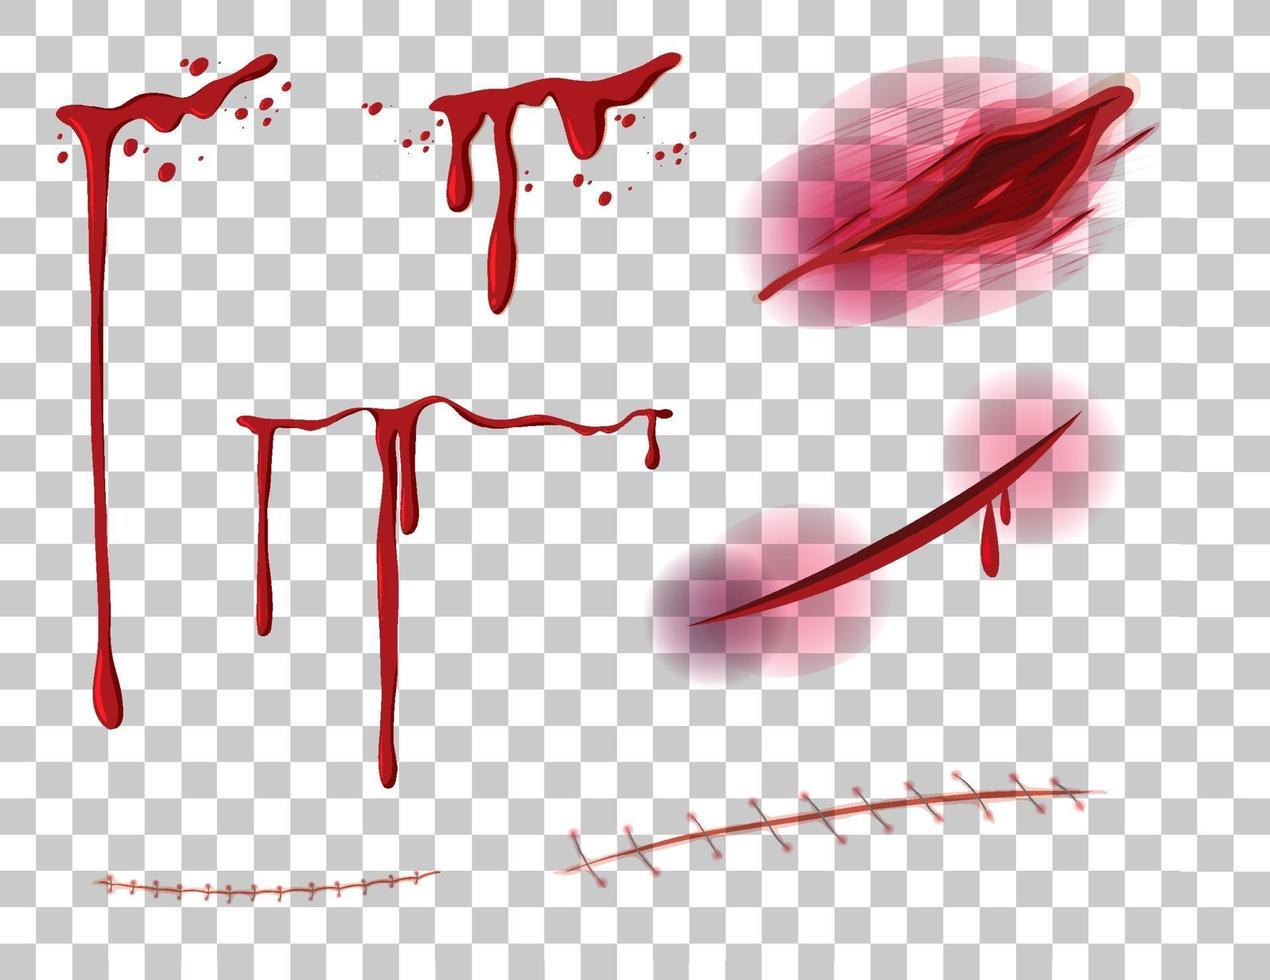 sangre que gotea roja con muchas heridas diferentes sobre fondo transparente vector